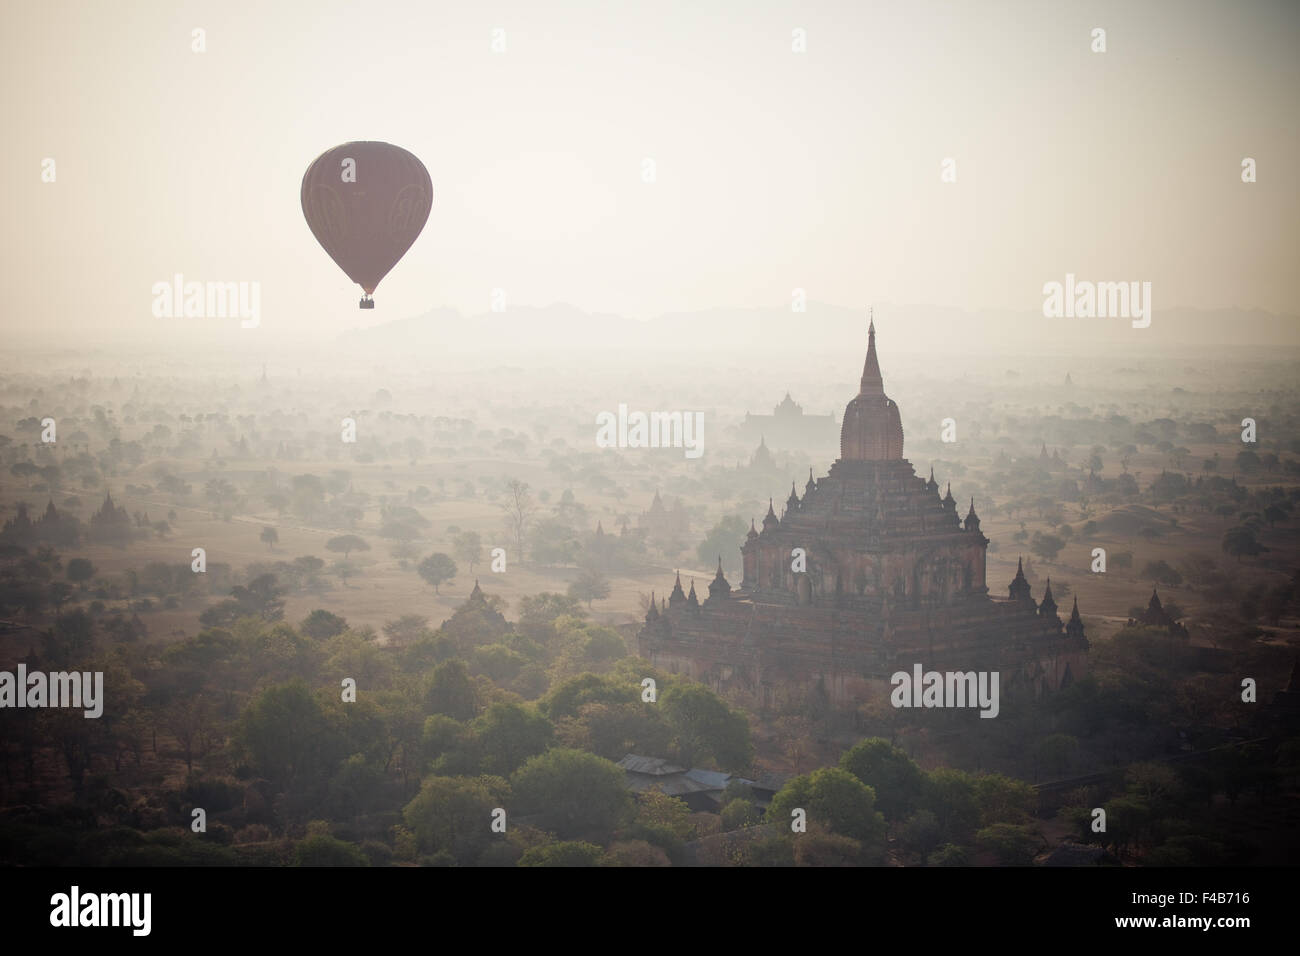 Balloon flight over Bagan ancient city, Kingdom of Pagan, temples and pagodas Burma (Myanmar) Stock Photo